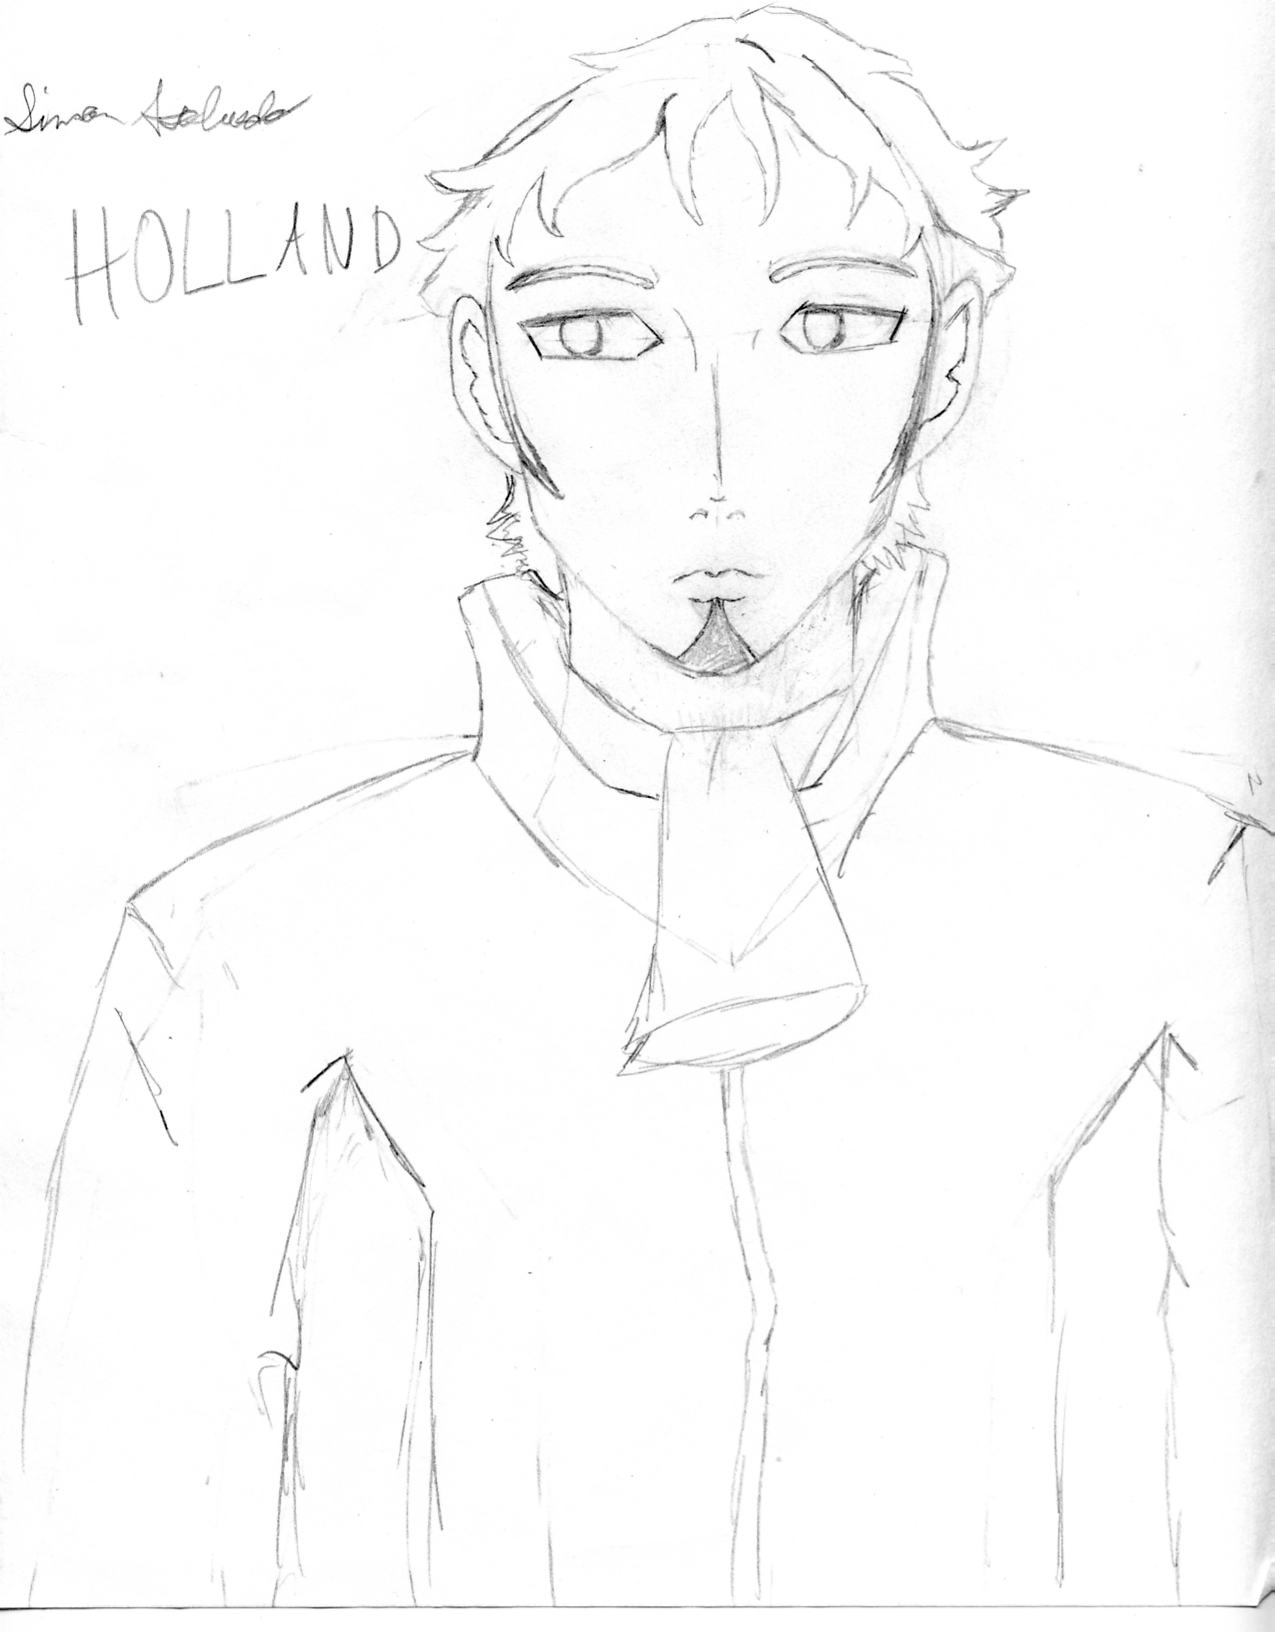 Holland by mediator